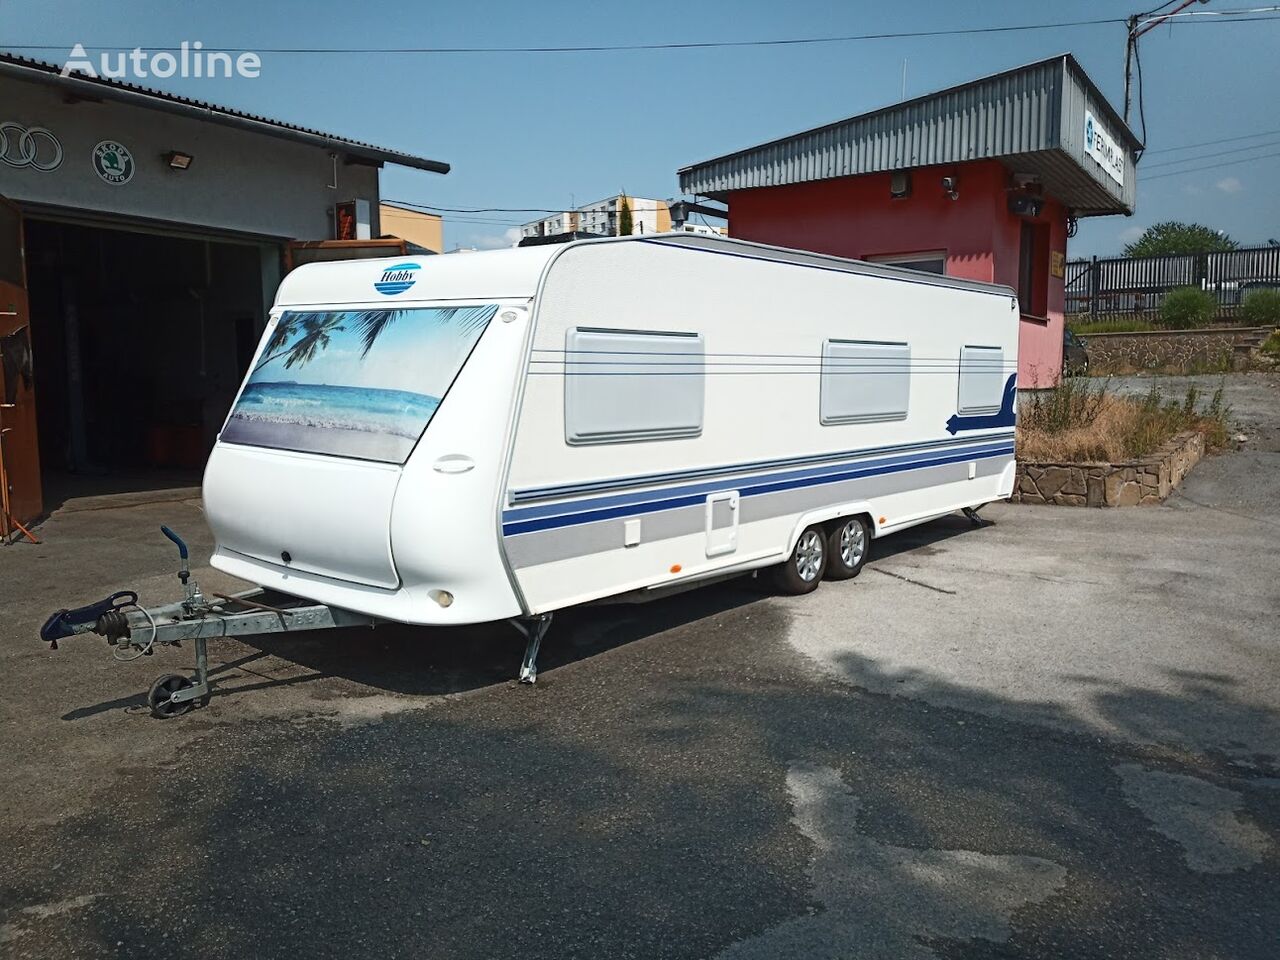 HOBBY Hobby 640 SMF UK KOLLECTION caravan trailer for sale Slovakia Prešov,  JD33289